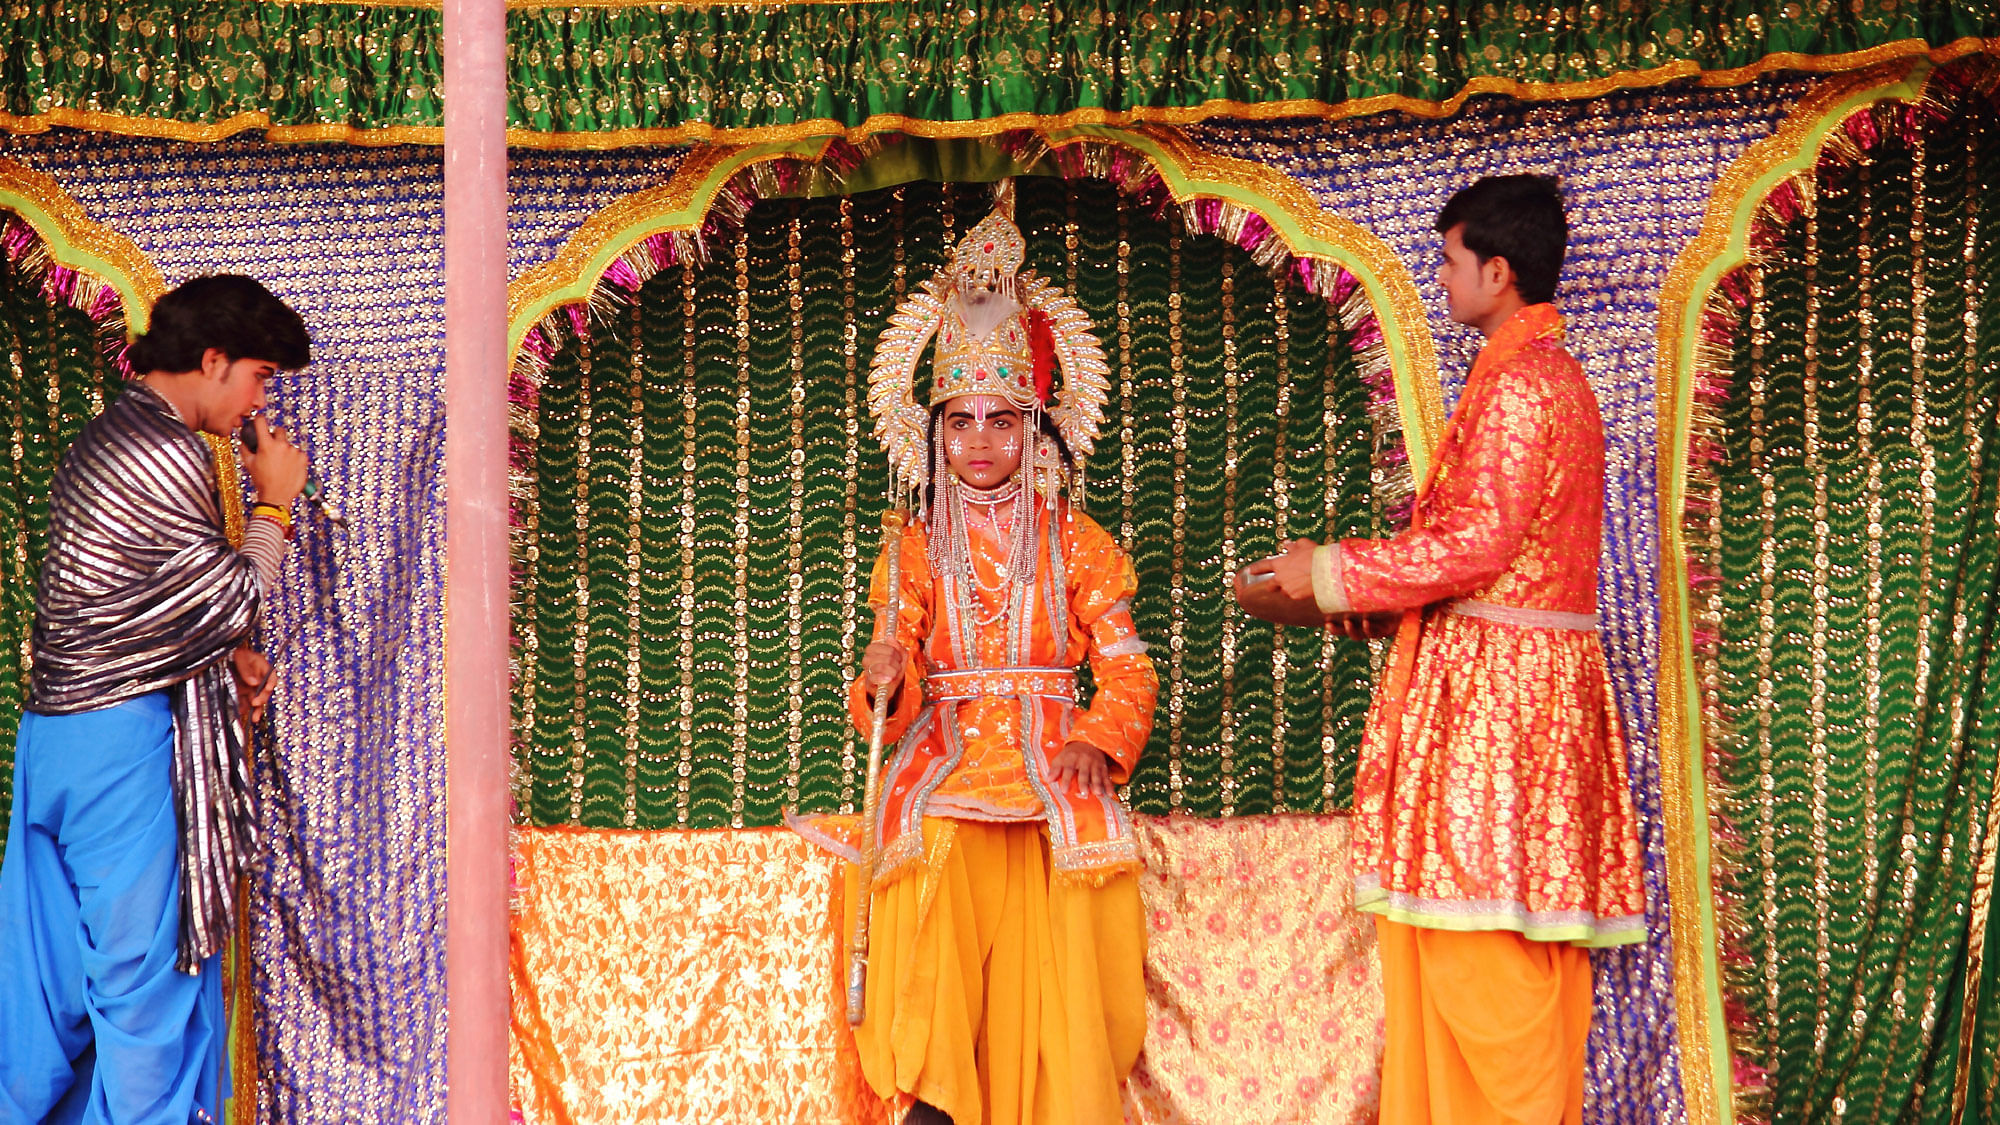 Ramleela performance in Allahabad, Uttar Pradesh on February 24, 2013. (Photo: iStockphoto)